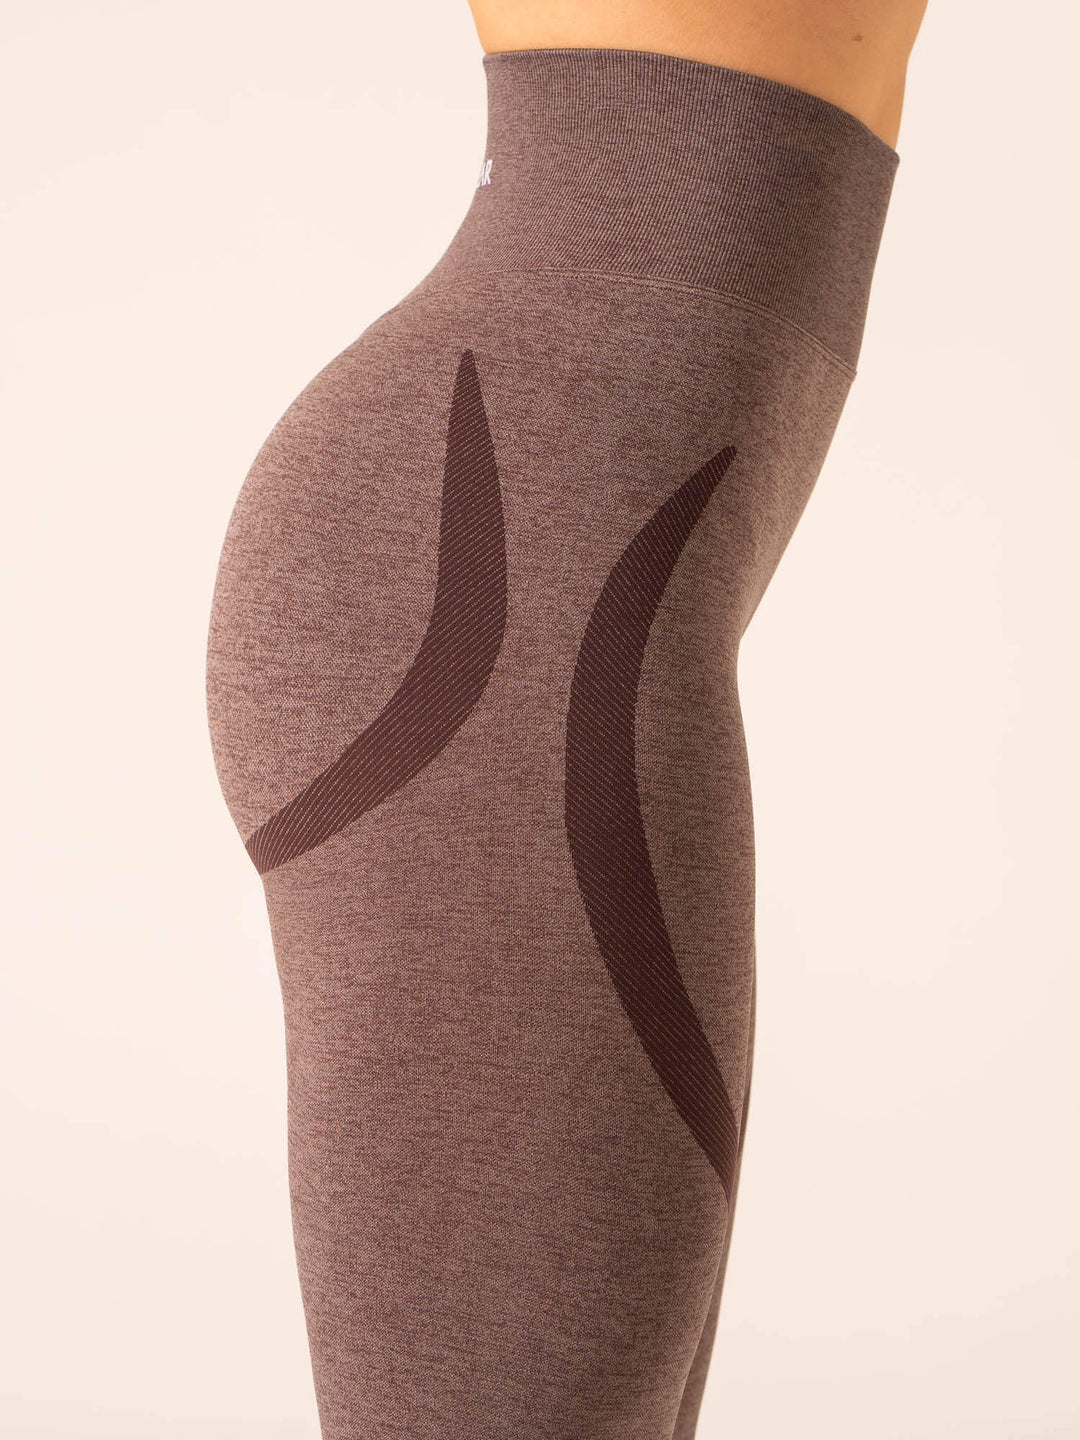 Sculpt Seamless Leggings - Chocolate Marl Clothing Ryderwear 